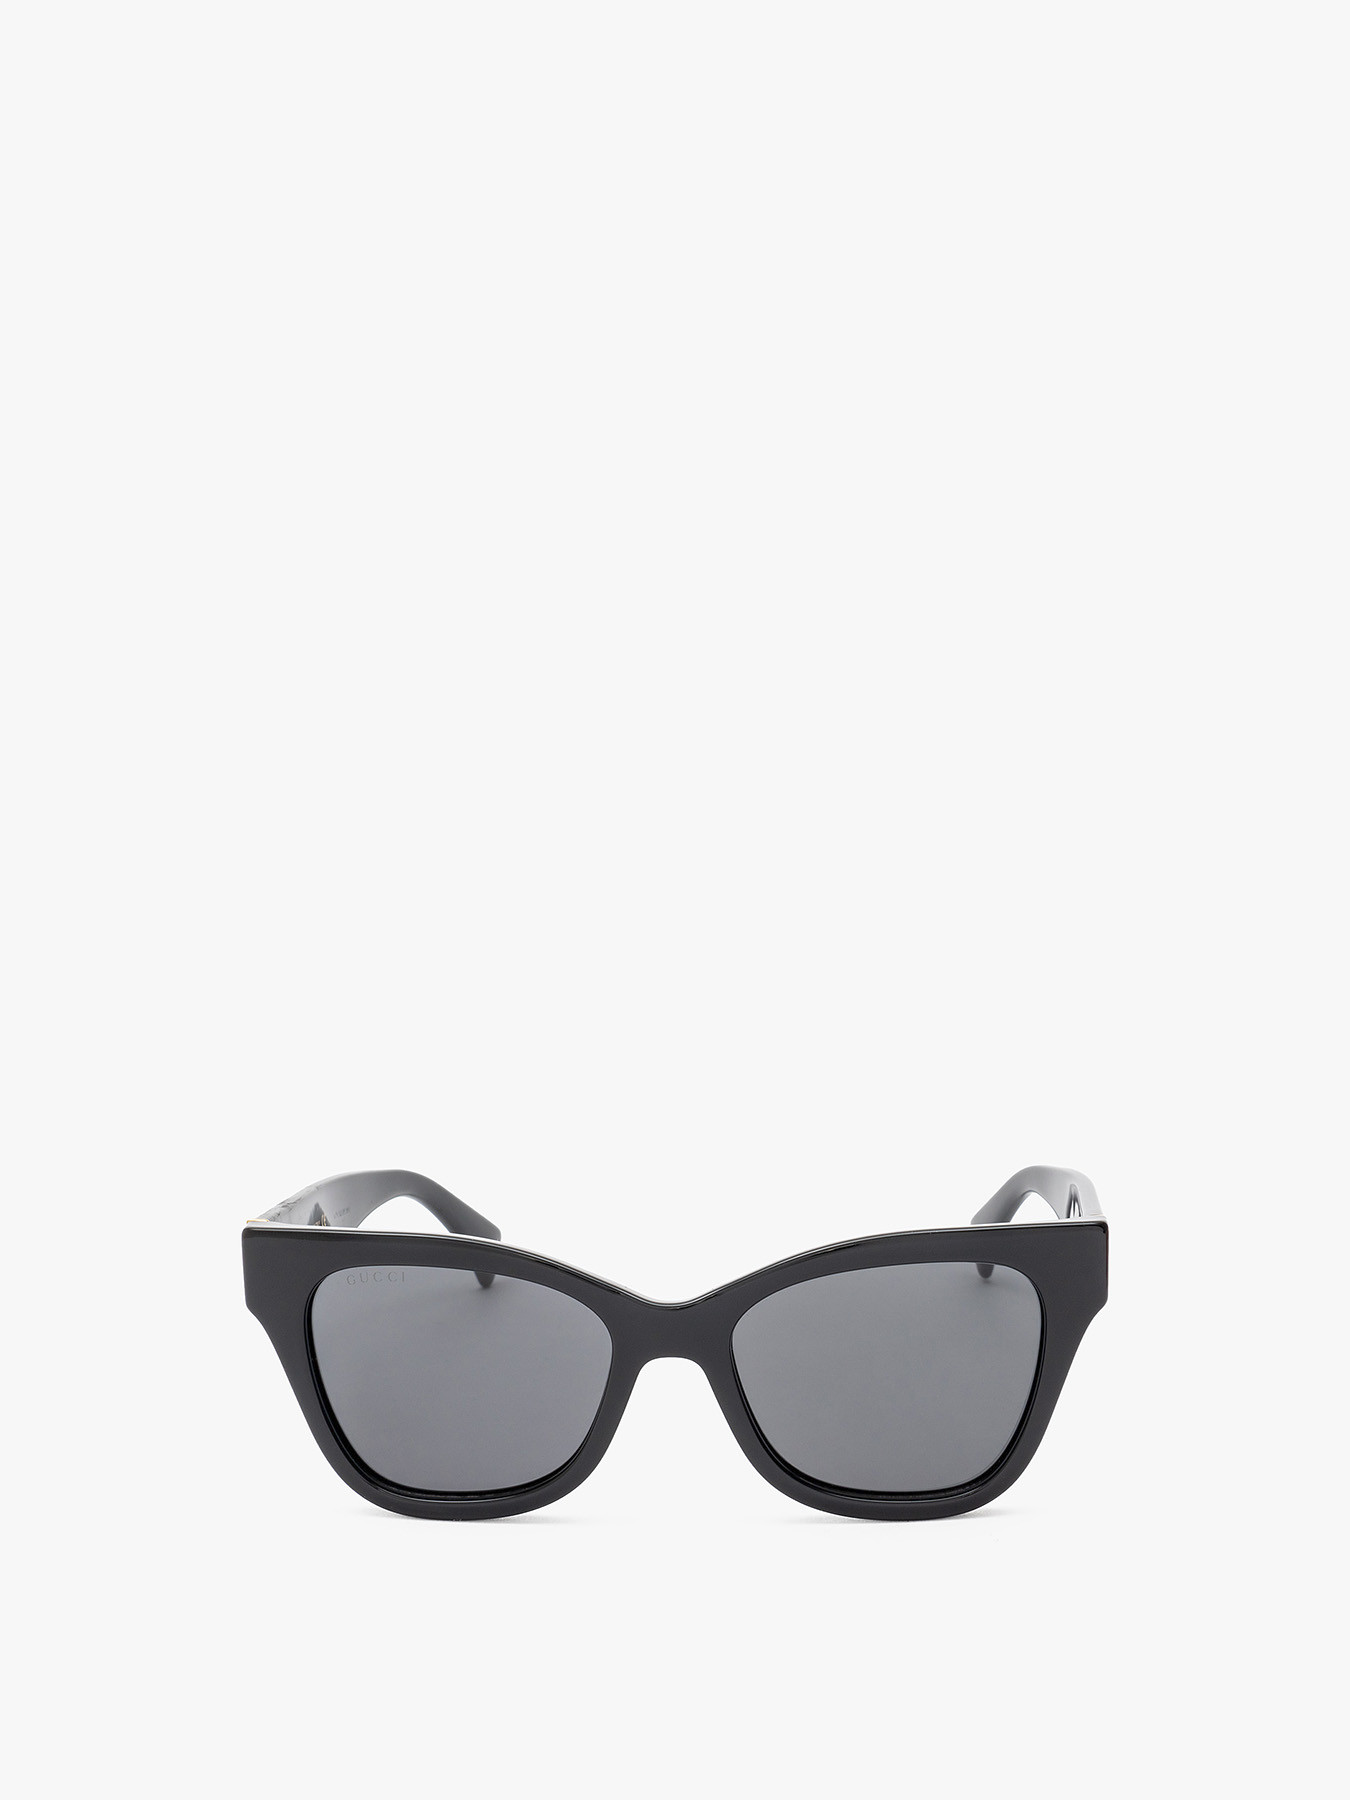 Gucci Logo Injection Sunglasses Black-black-grey